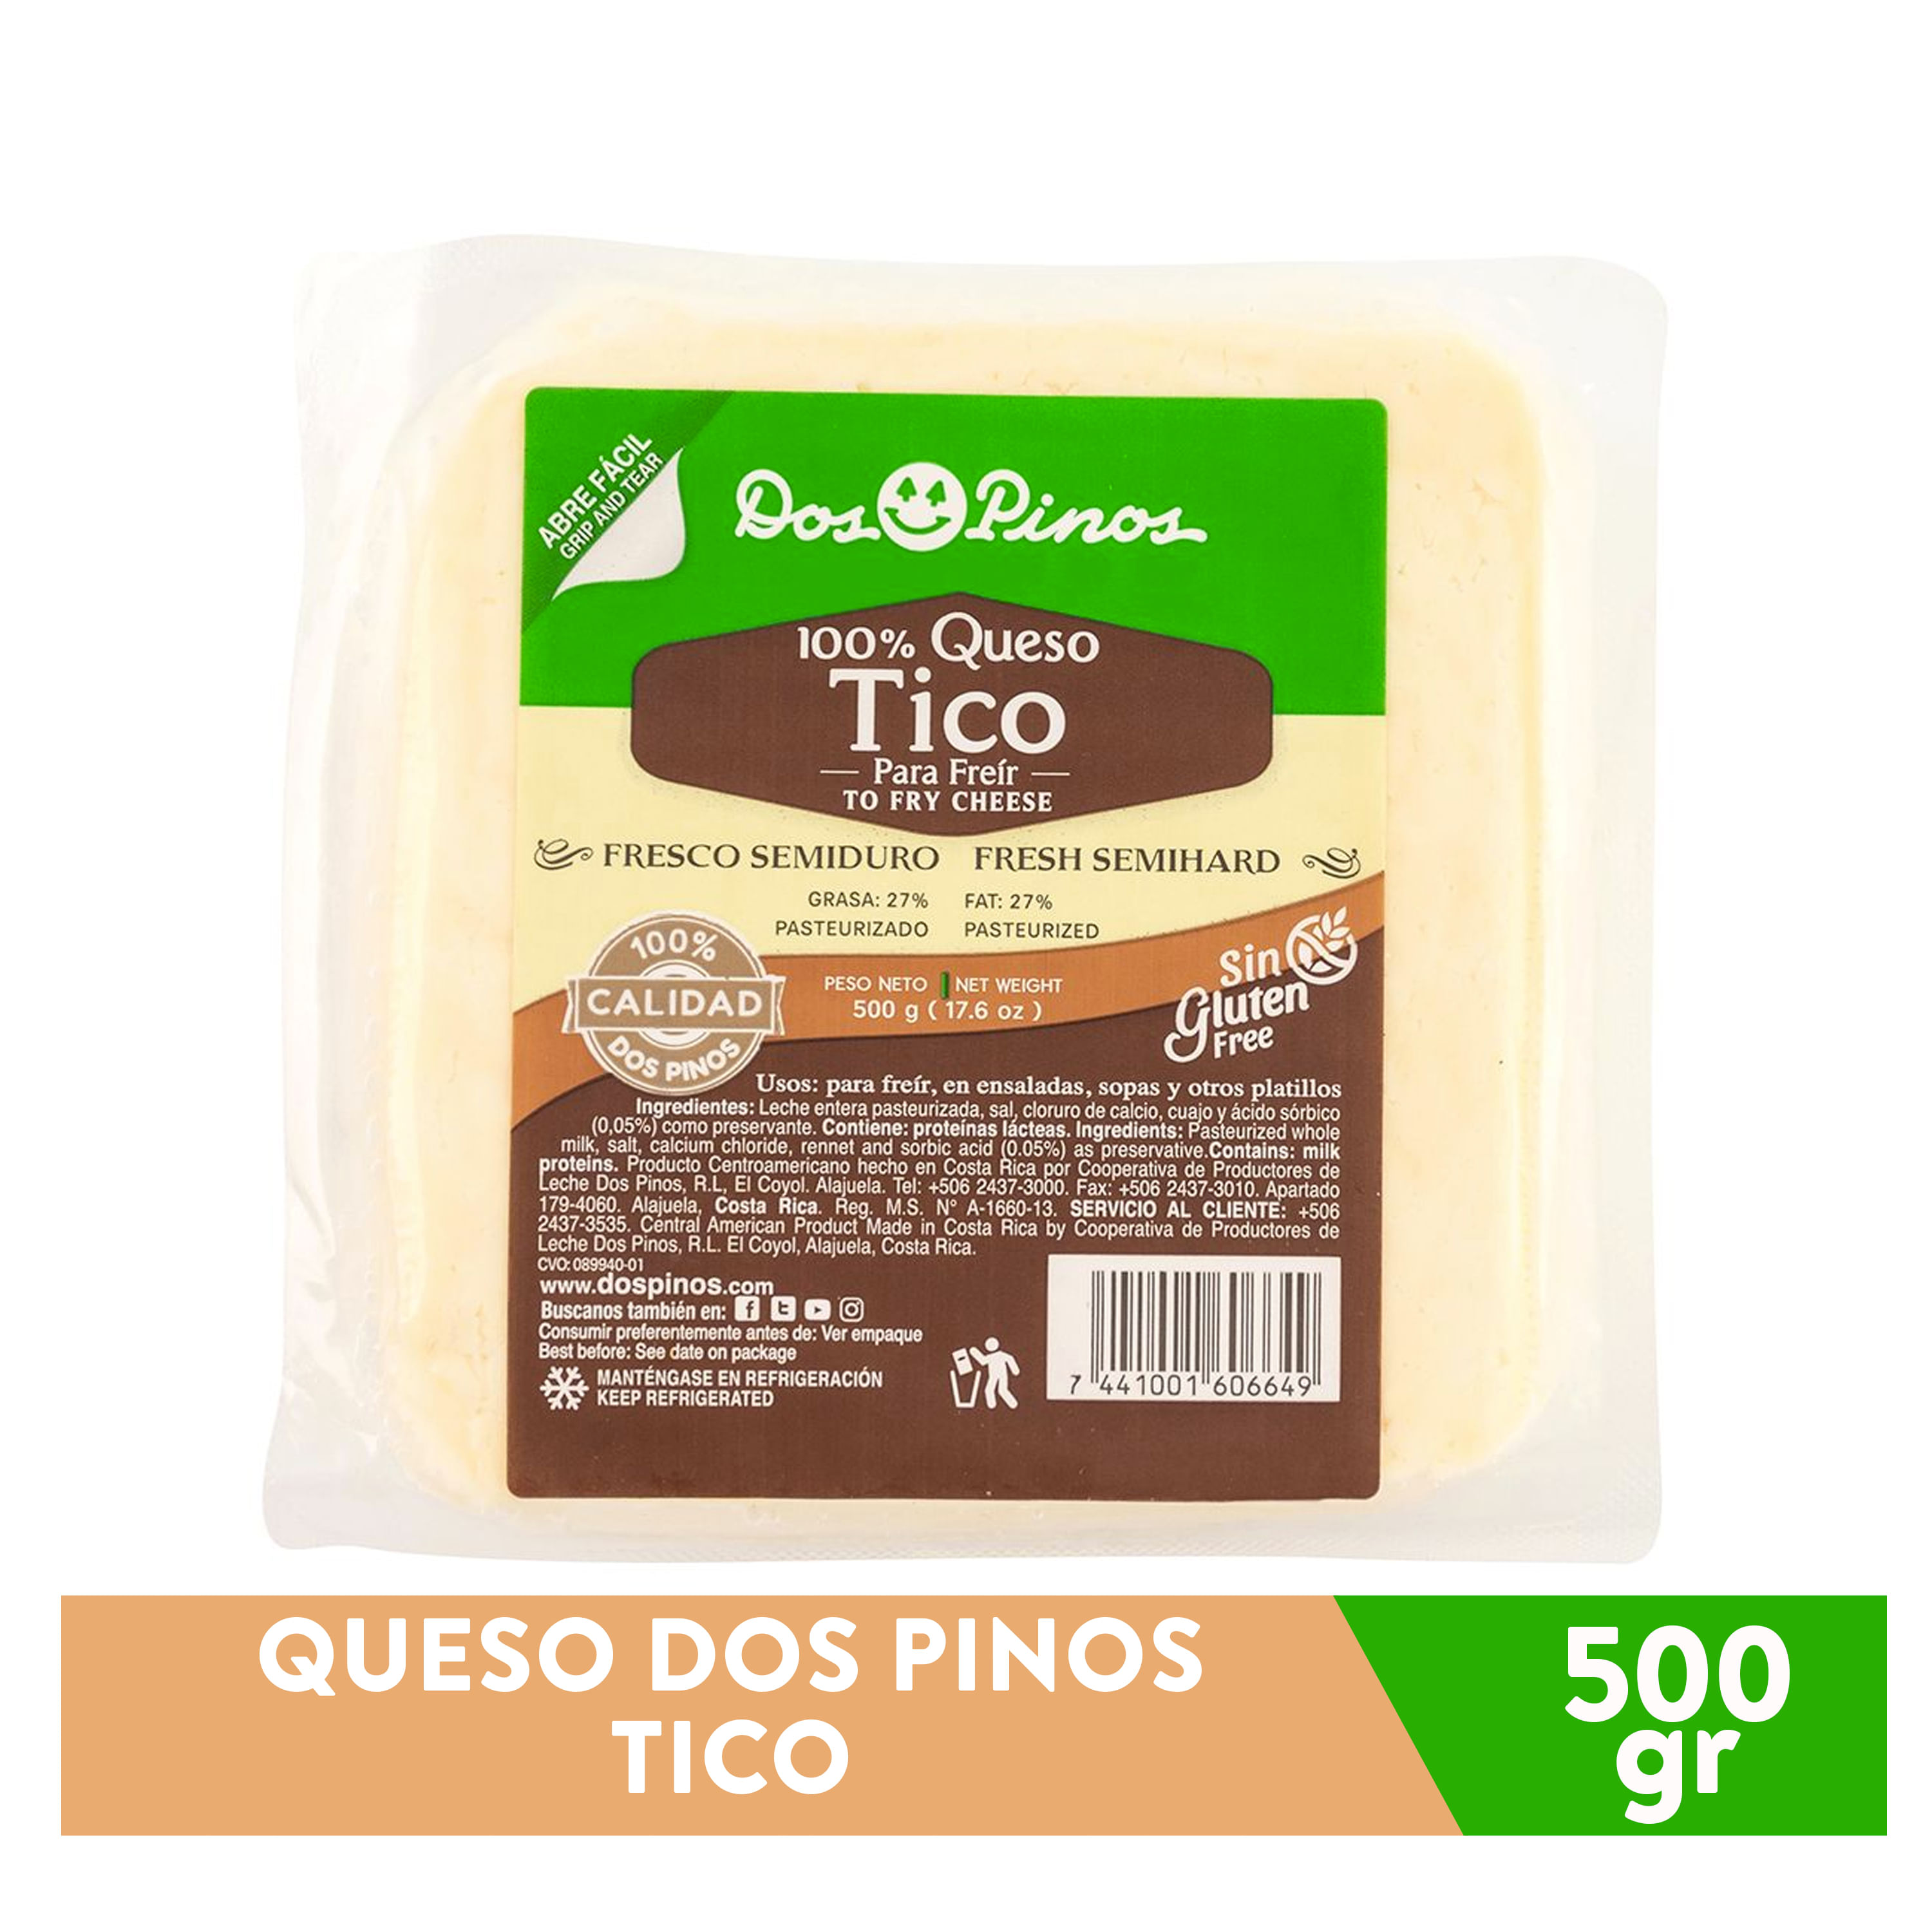 Queso-Fresco-Dos-Pinos-Tico-500Gr-1-25620